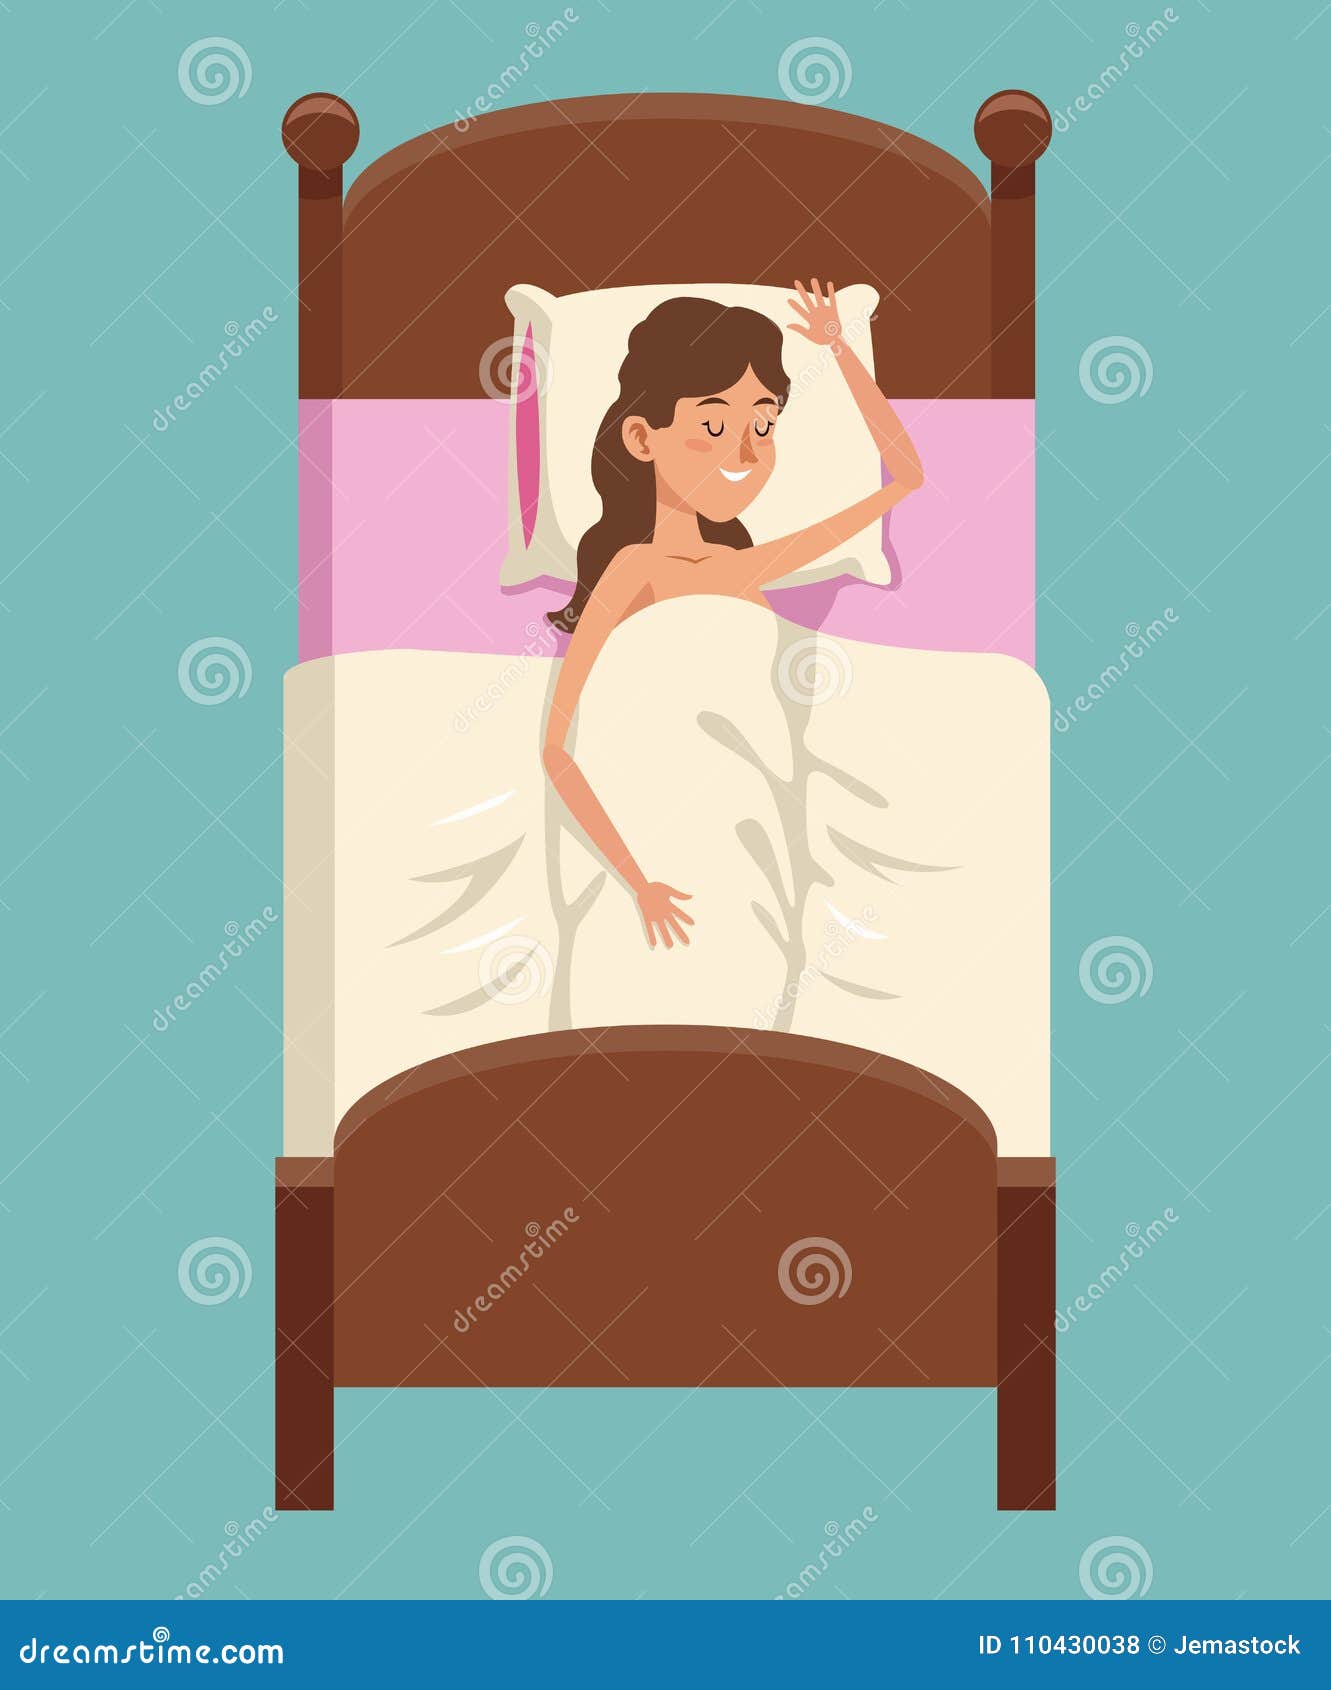 Cartoon Woman Shirtless Smile Sleeping In Bed Stock Vector